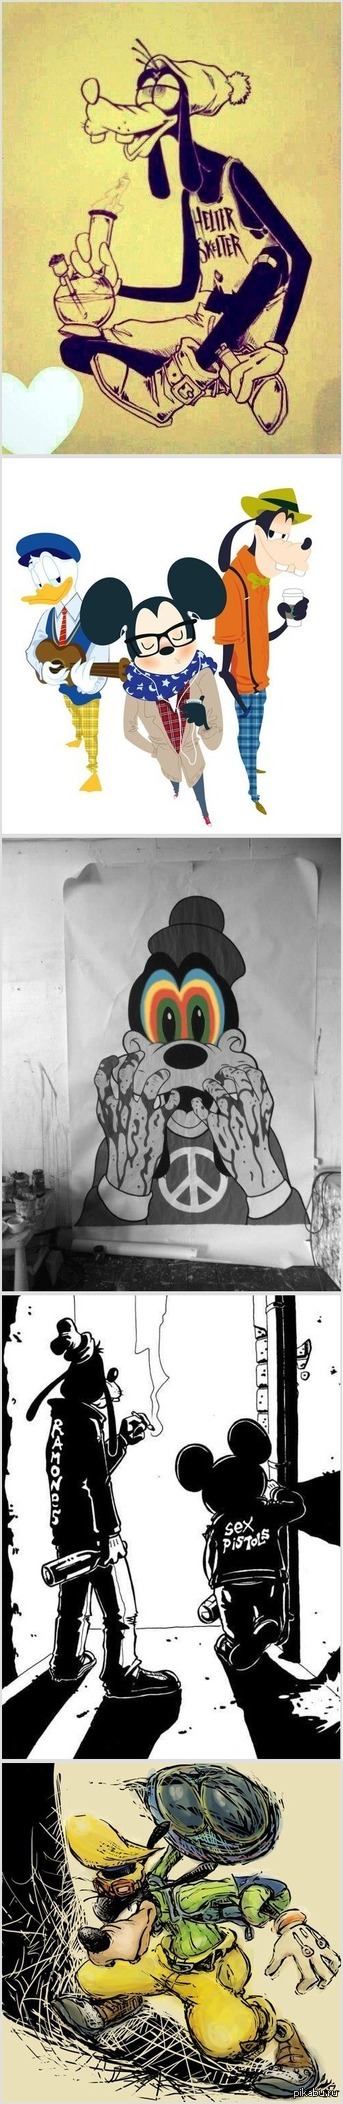 Art. Disney. - Art, Walt disney company, A selection, Mickey Mouse, Goofy